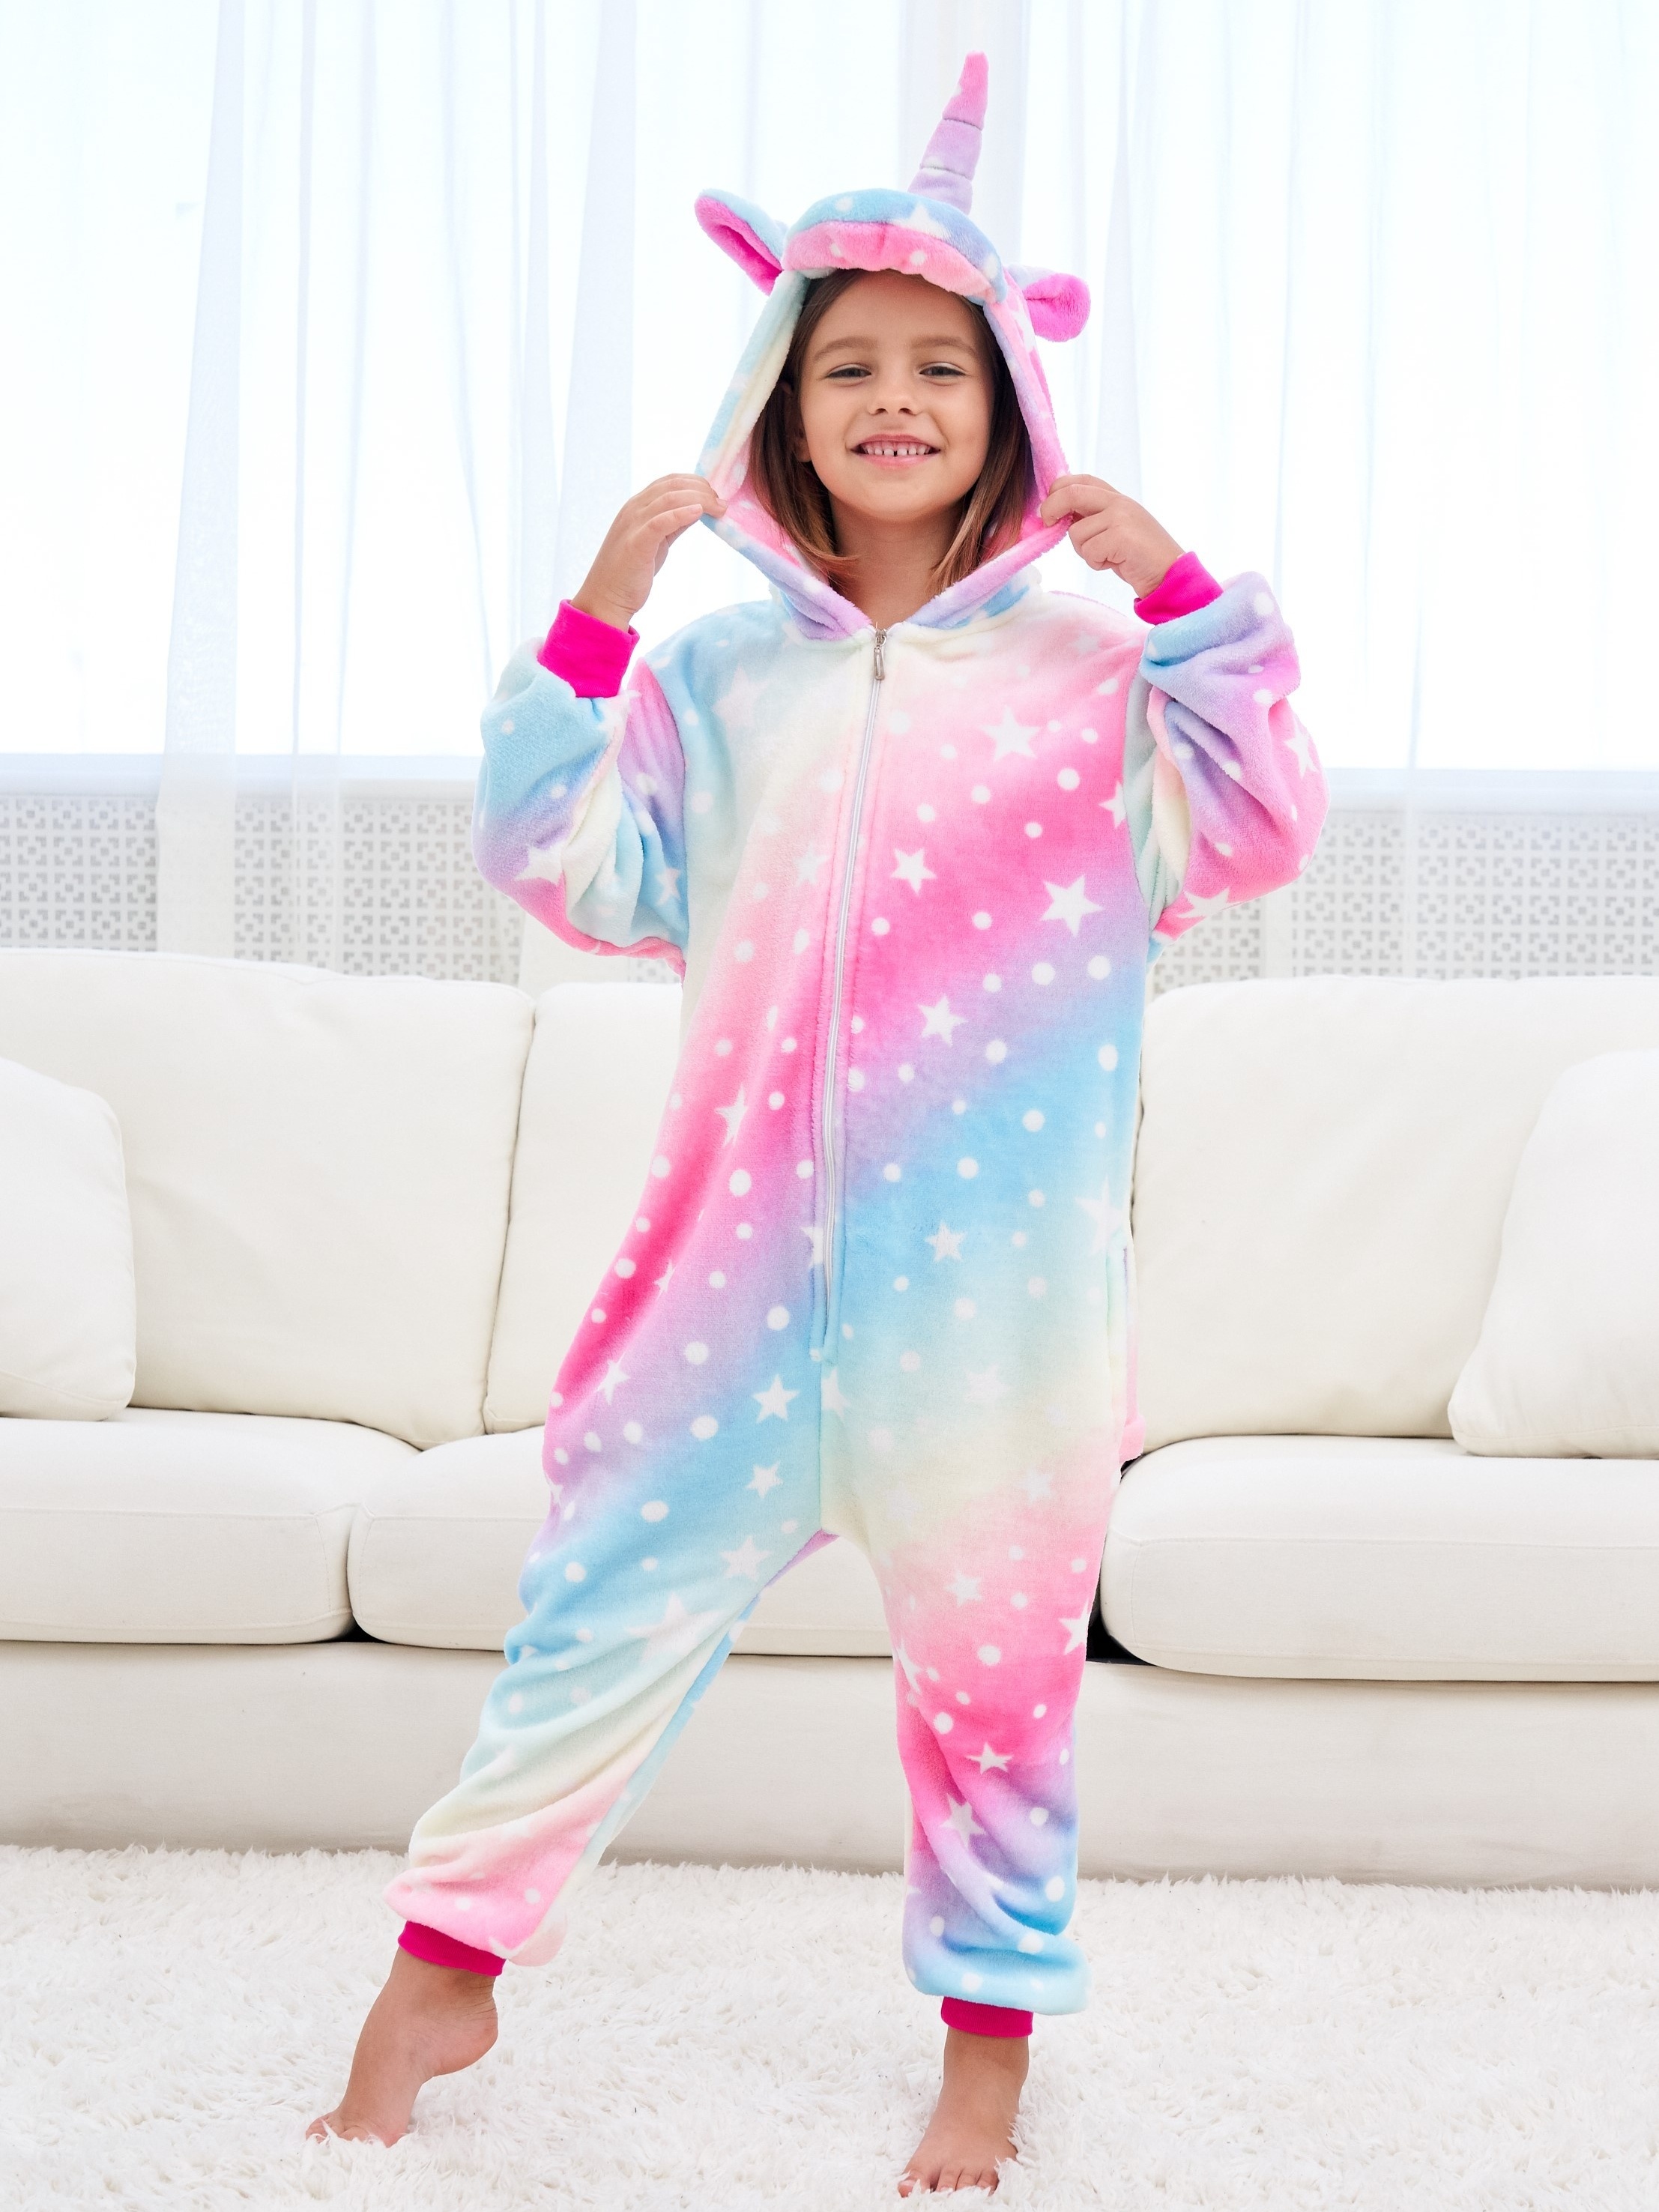 Cute Light Blue and Pink Rainbow Unicorn Hooded Pajama Onesie 